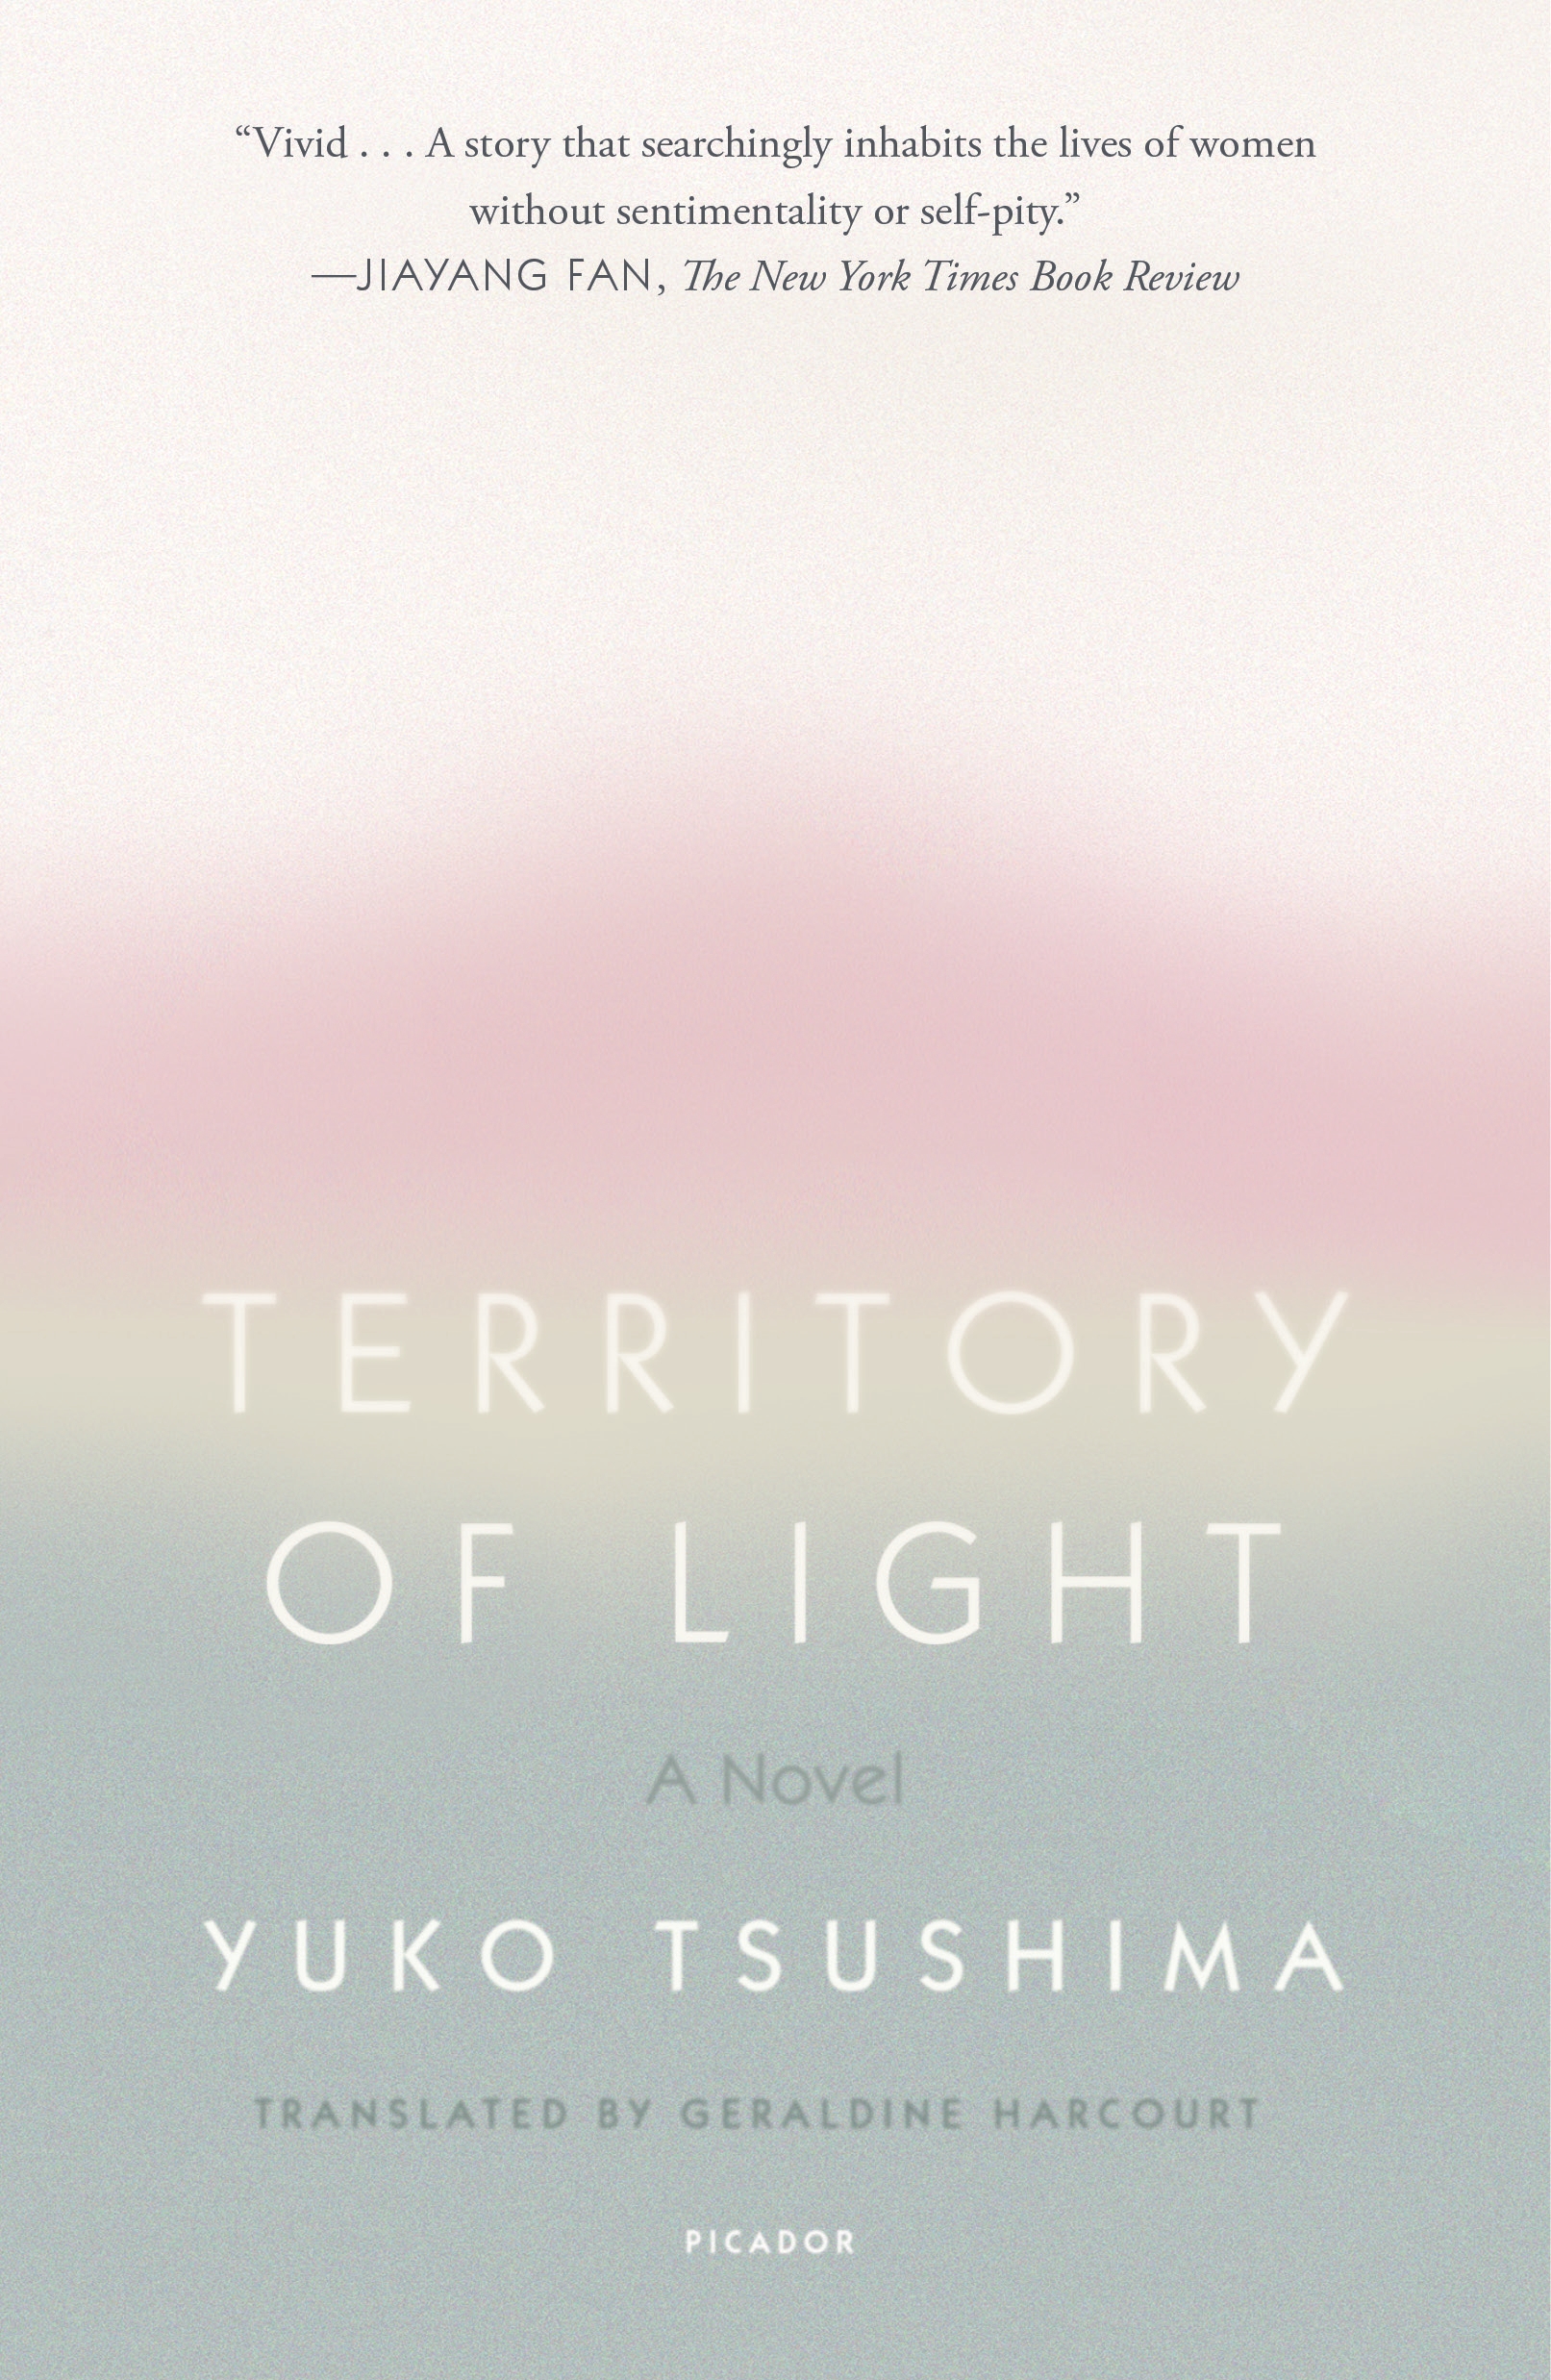 Book “Territory of Light” by Yuko Tsushima — March 31, 2020